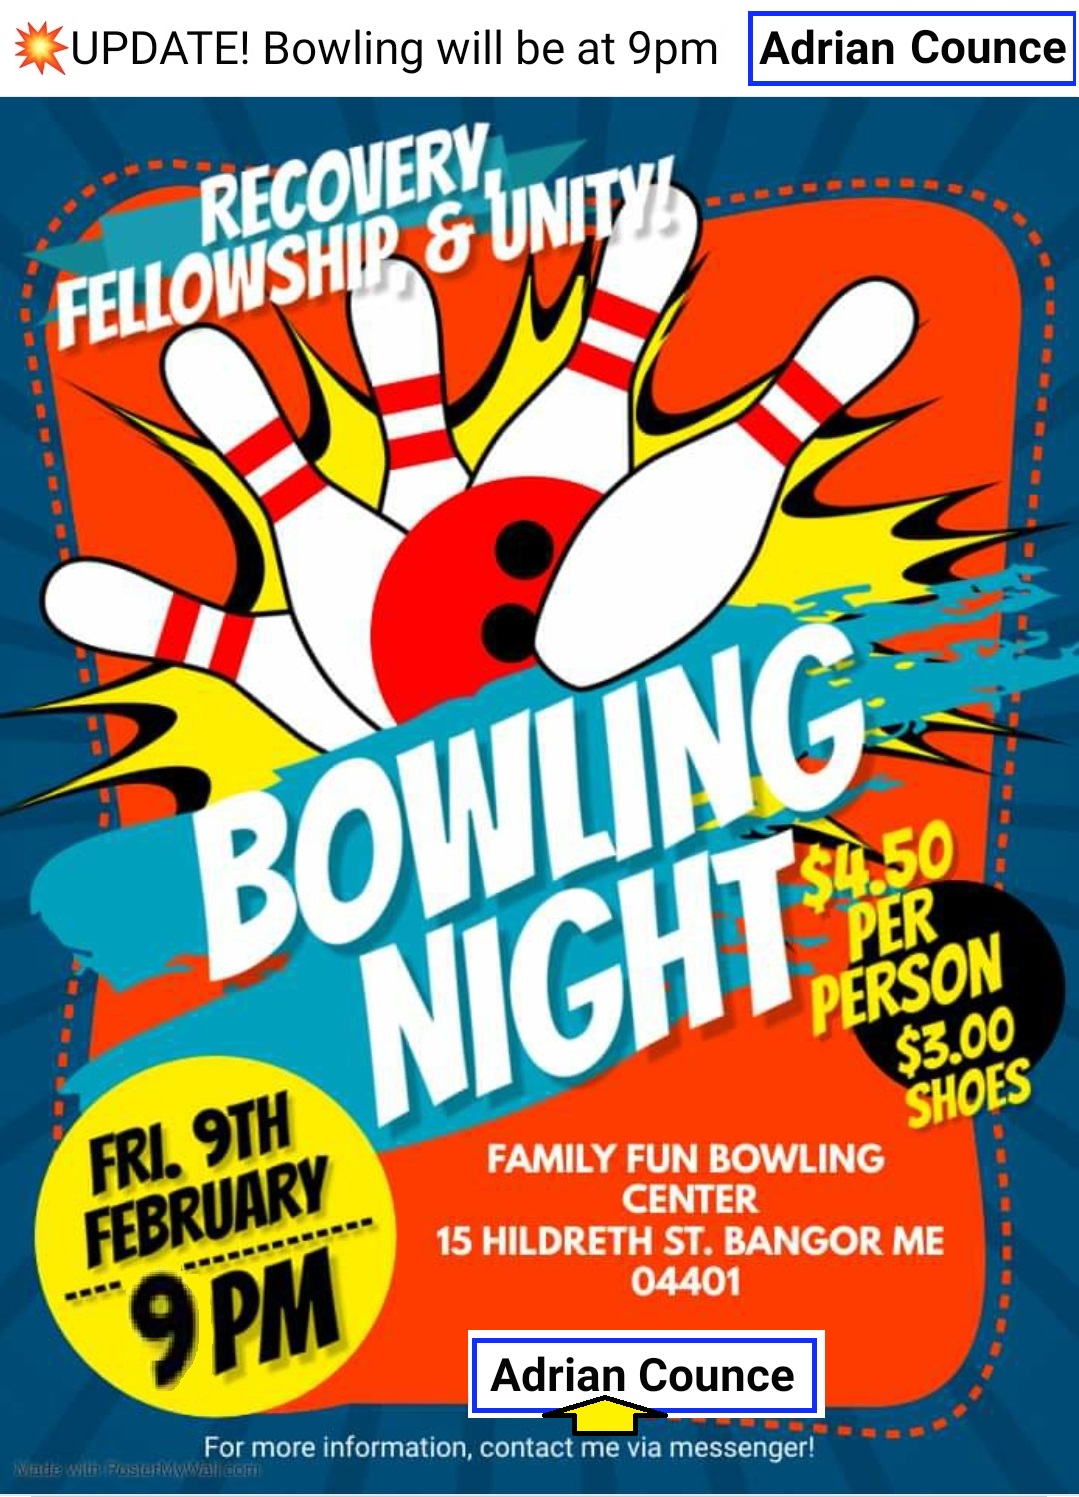 Bowling Night in Bangor @ Family Fun Bowling Center | Bangor | Maine | United States